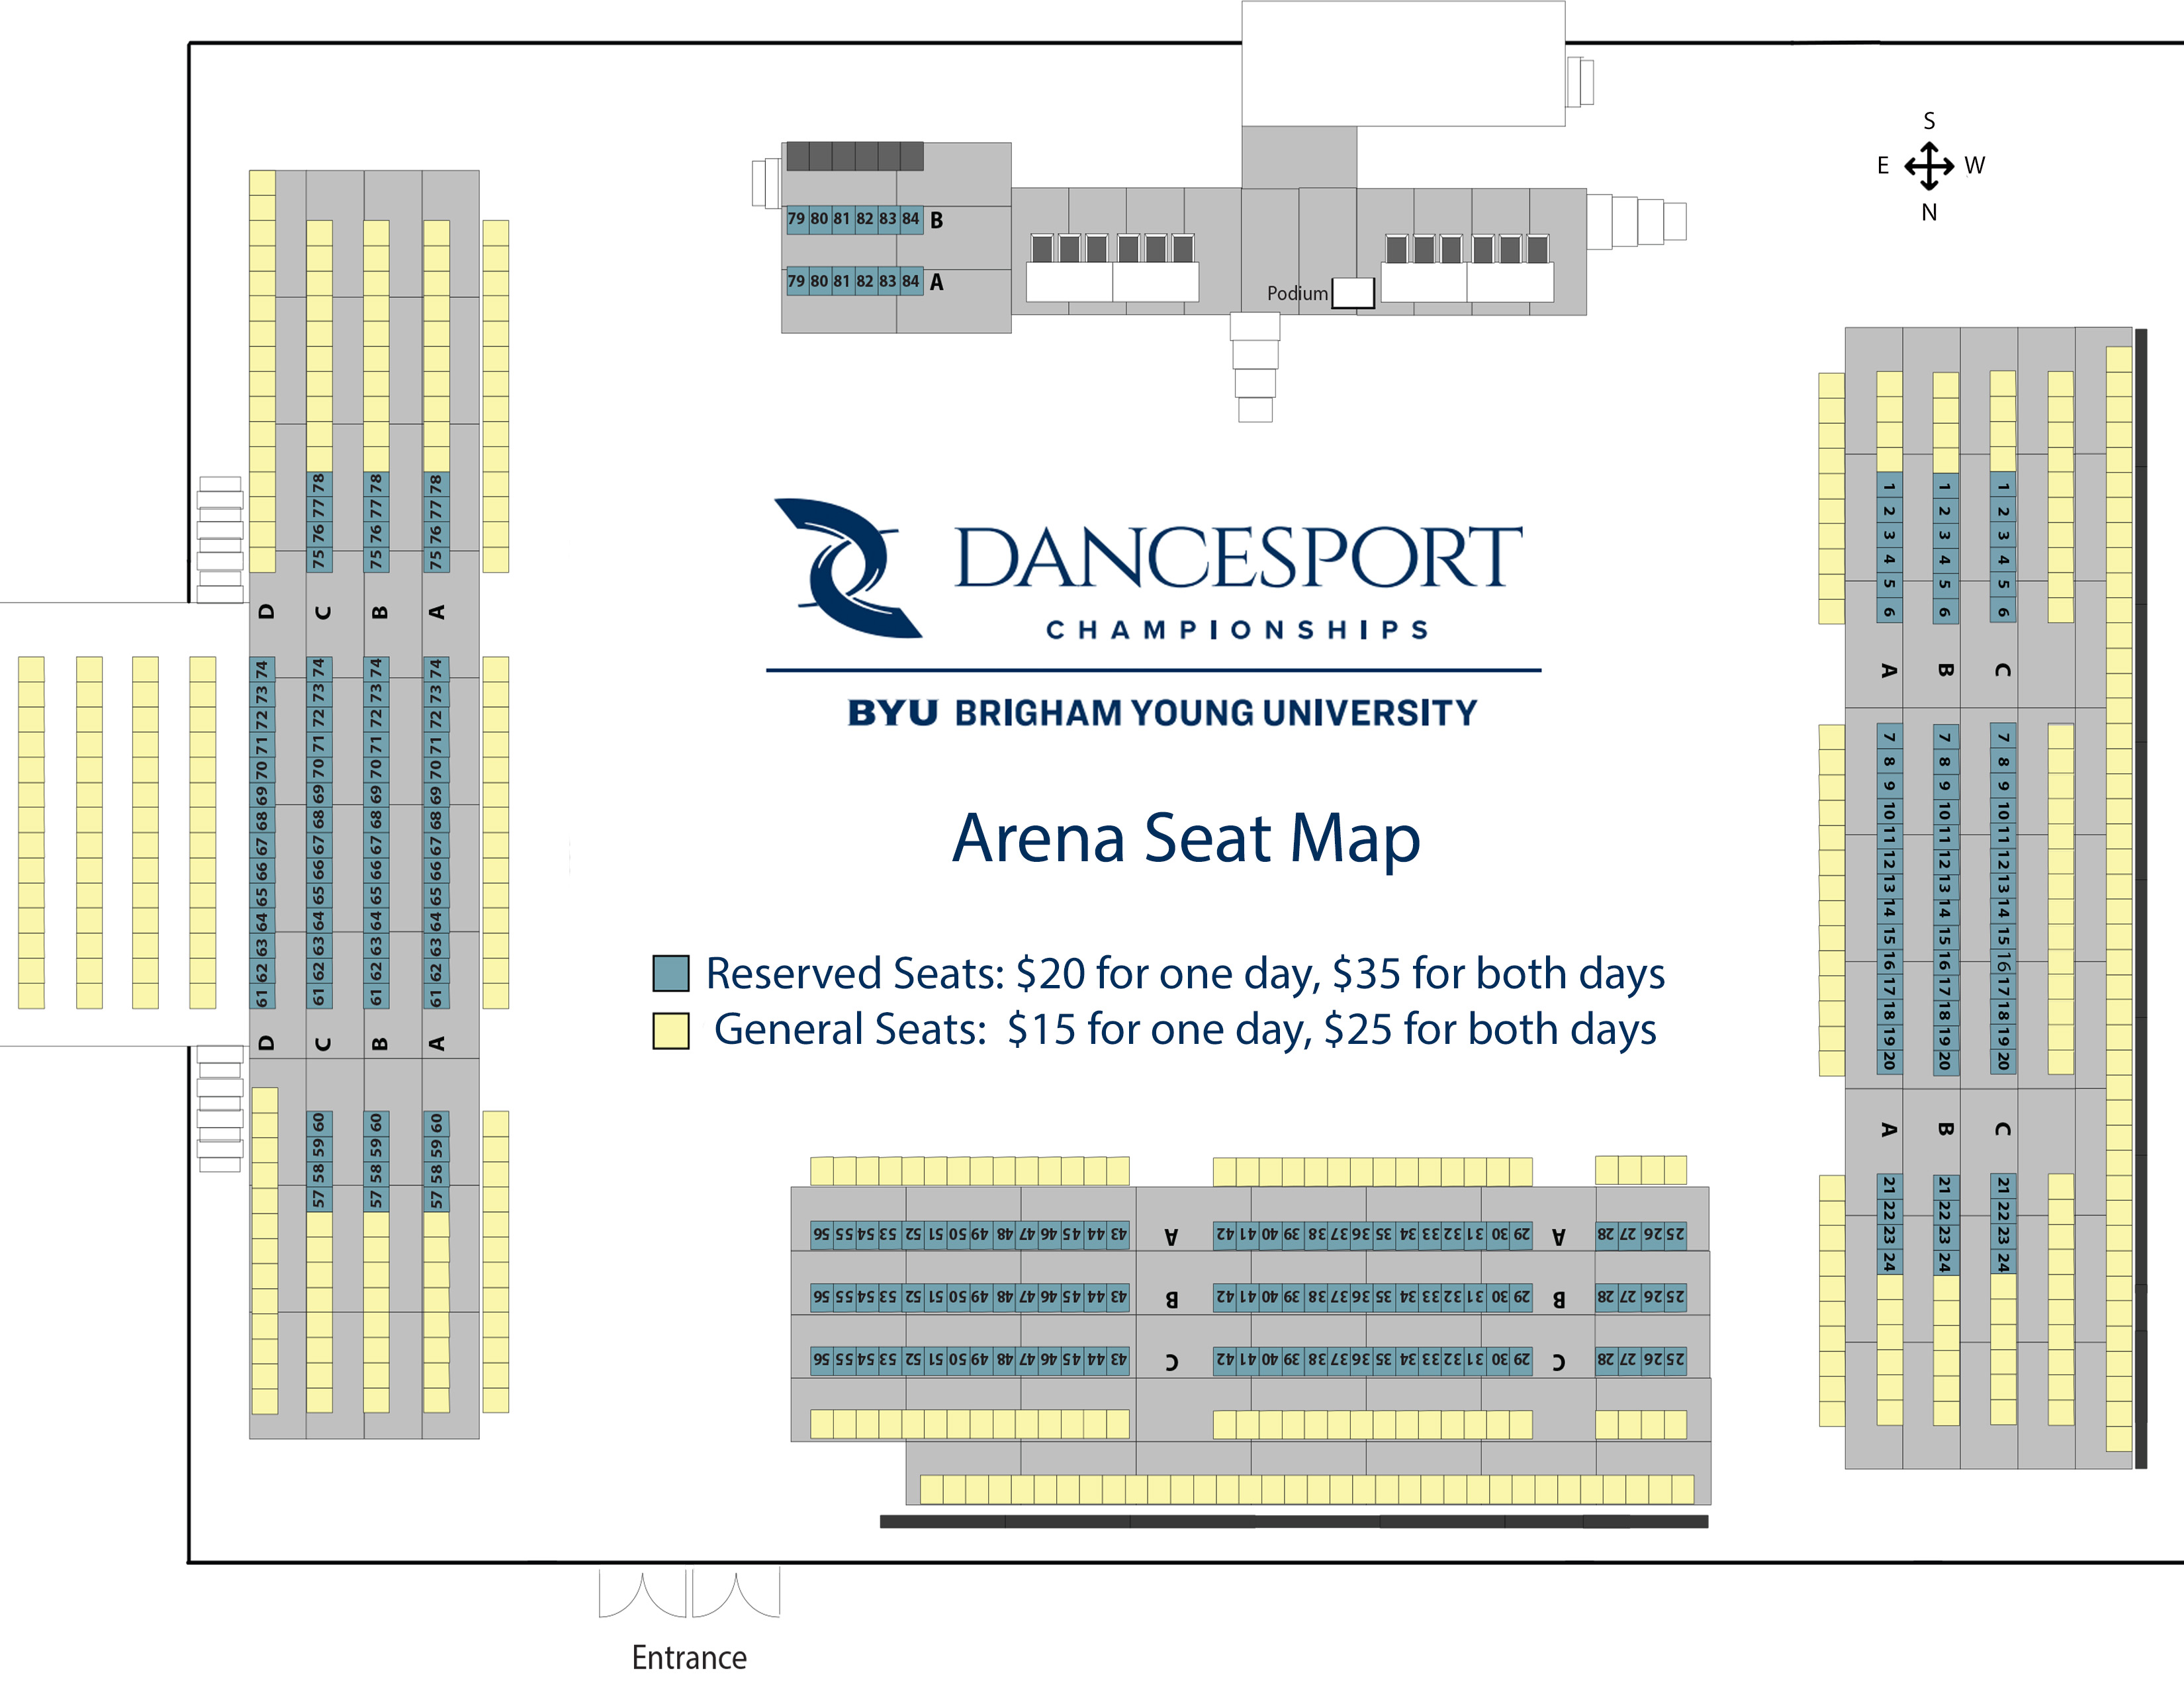 2022 BYU Dancesport Arena Seat Map.jpg